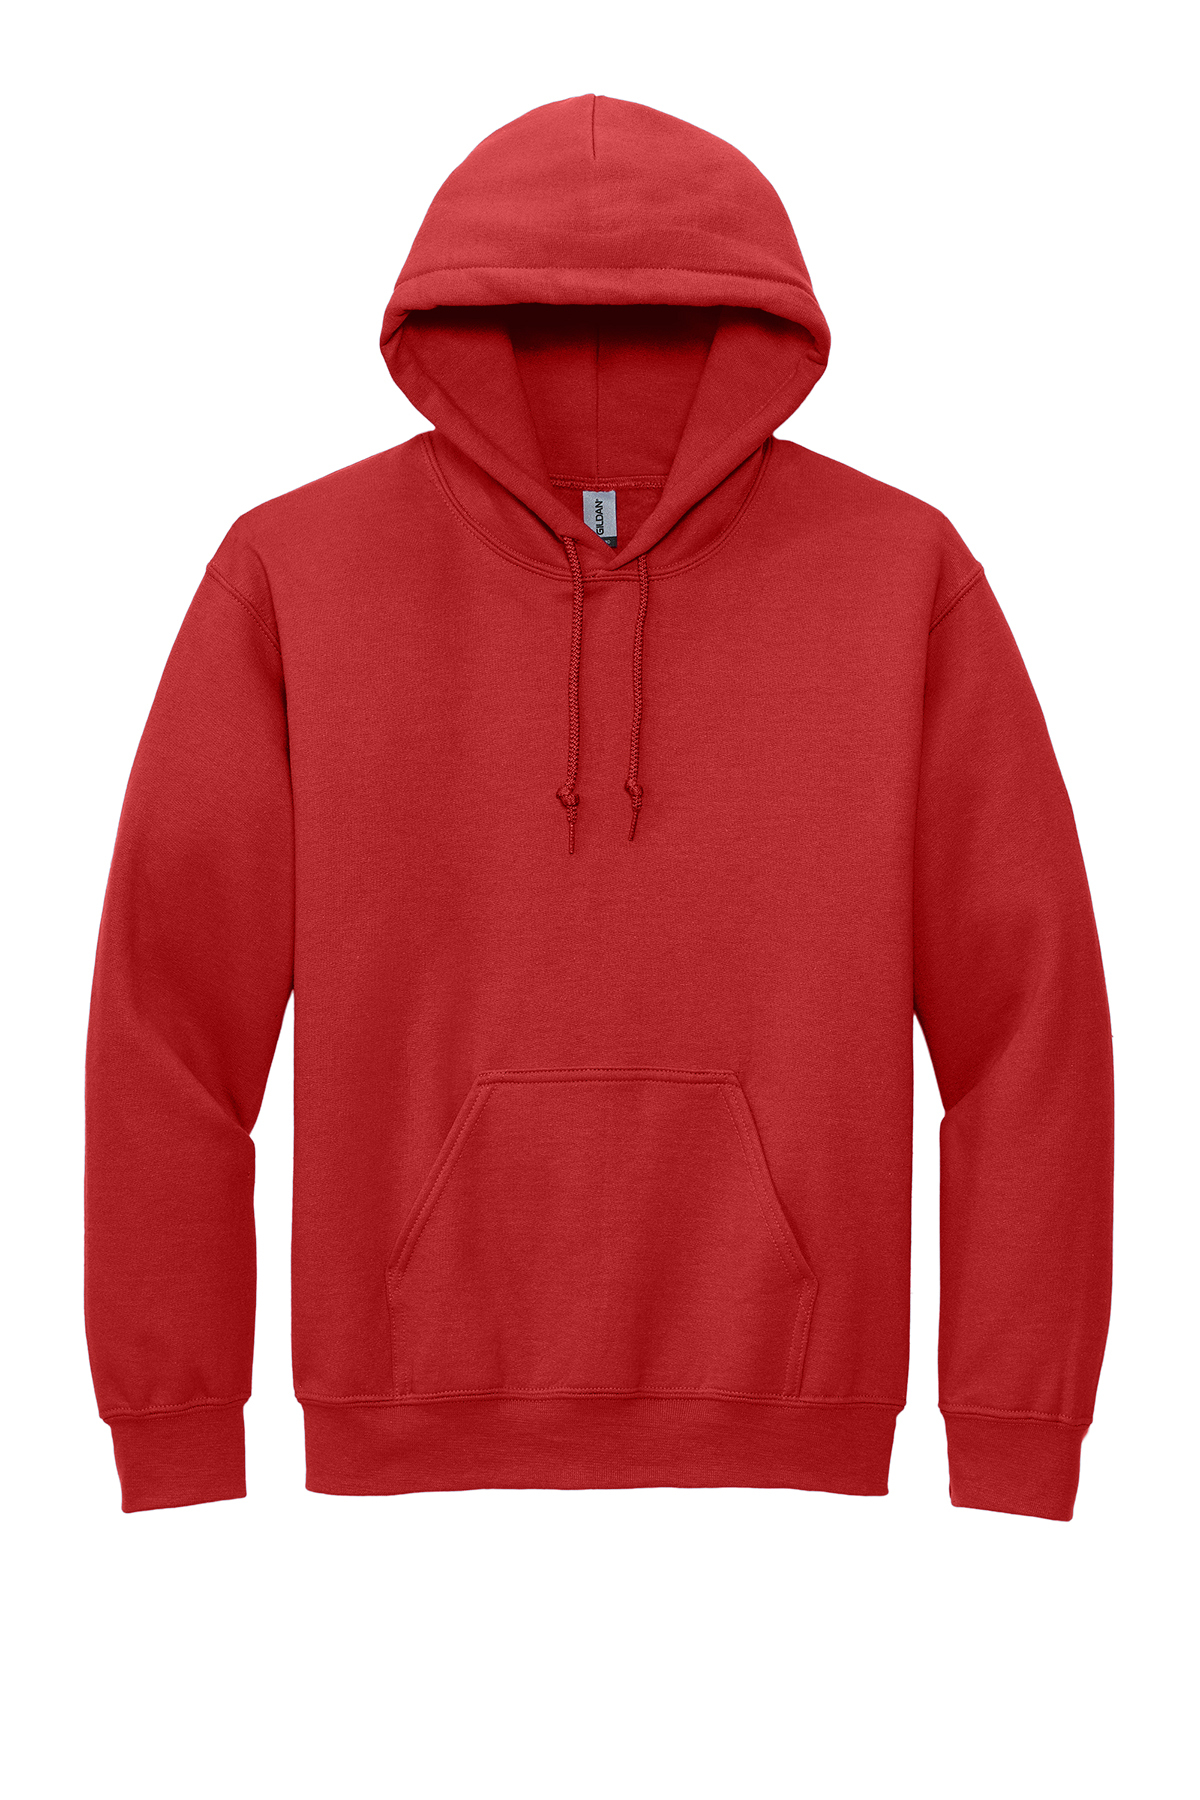 | Sweatshirt SanMar Product | DryBlend Pullover - Gildan Hooded